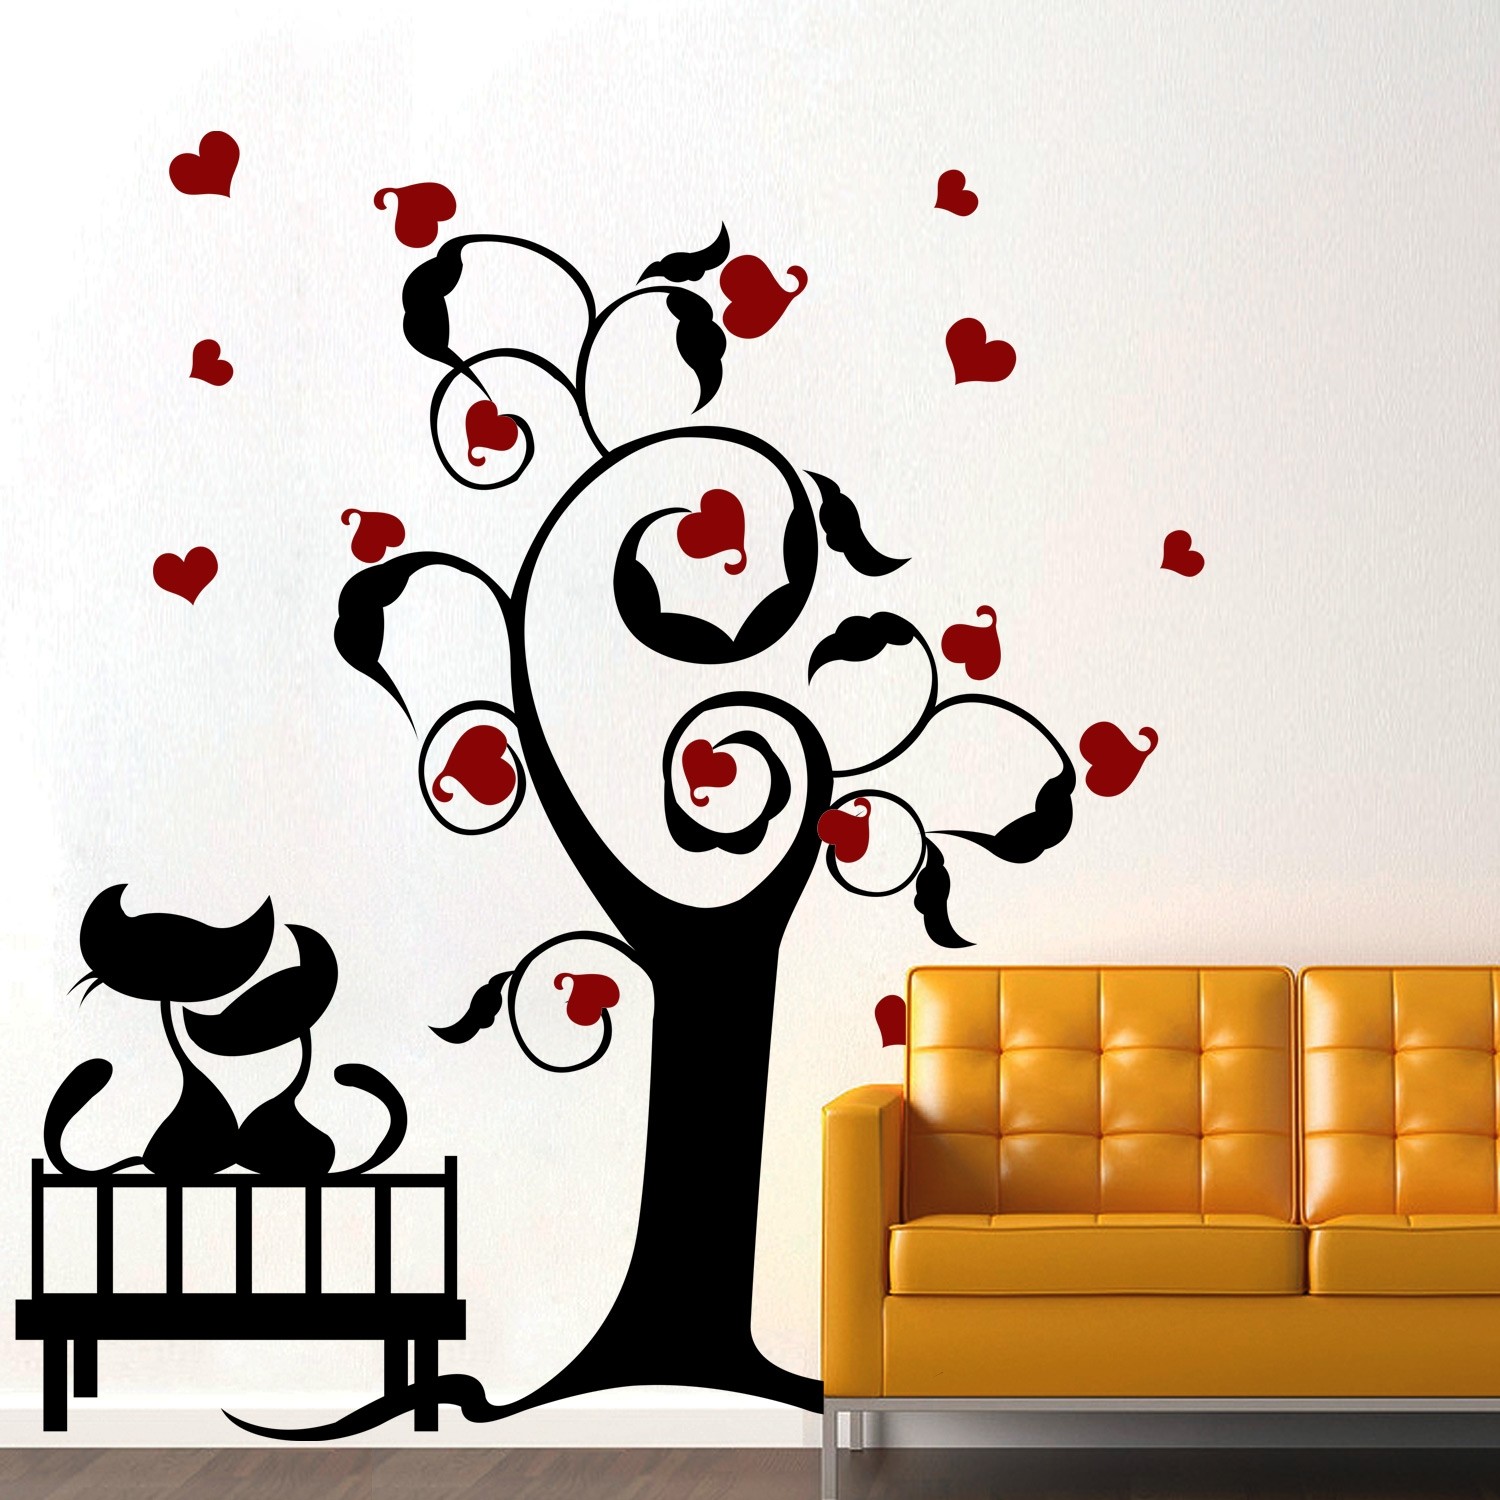 Cats In Love 2 Wall Sticker Decal-Medium